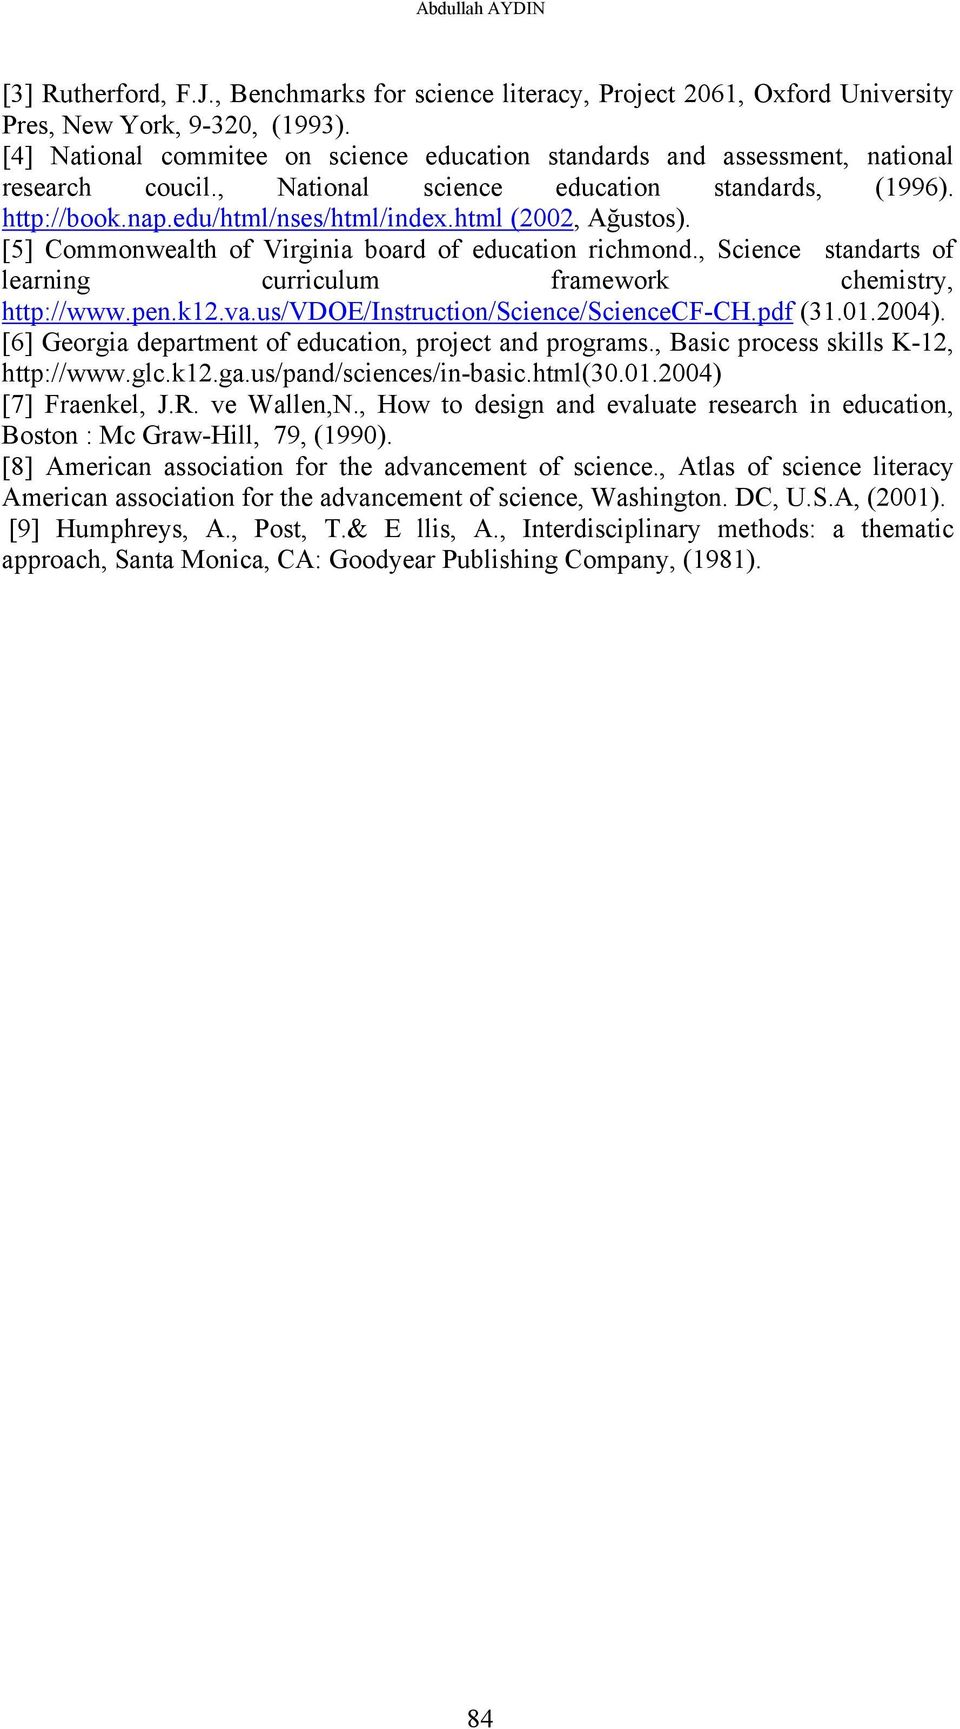 html (2002, Ağustos). [5] Commonwealth of Virginia board of education richmond., Science standarts of learning curriculum framework chemistry, http://www.pen.k12.va.